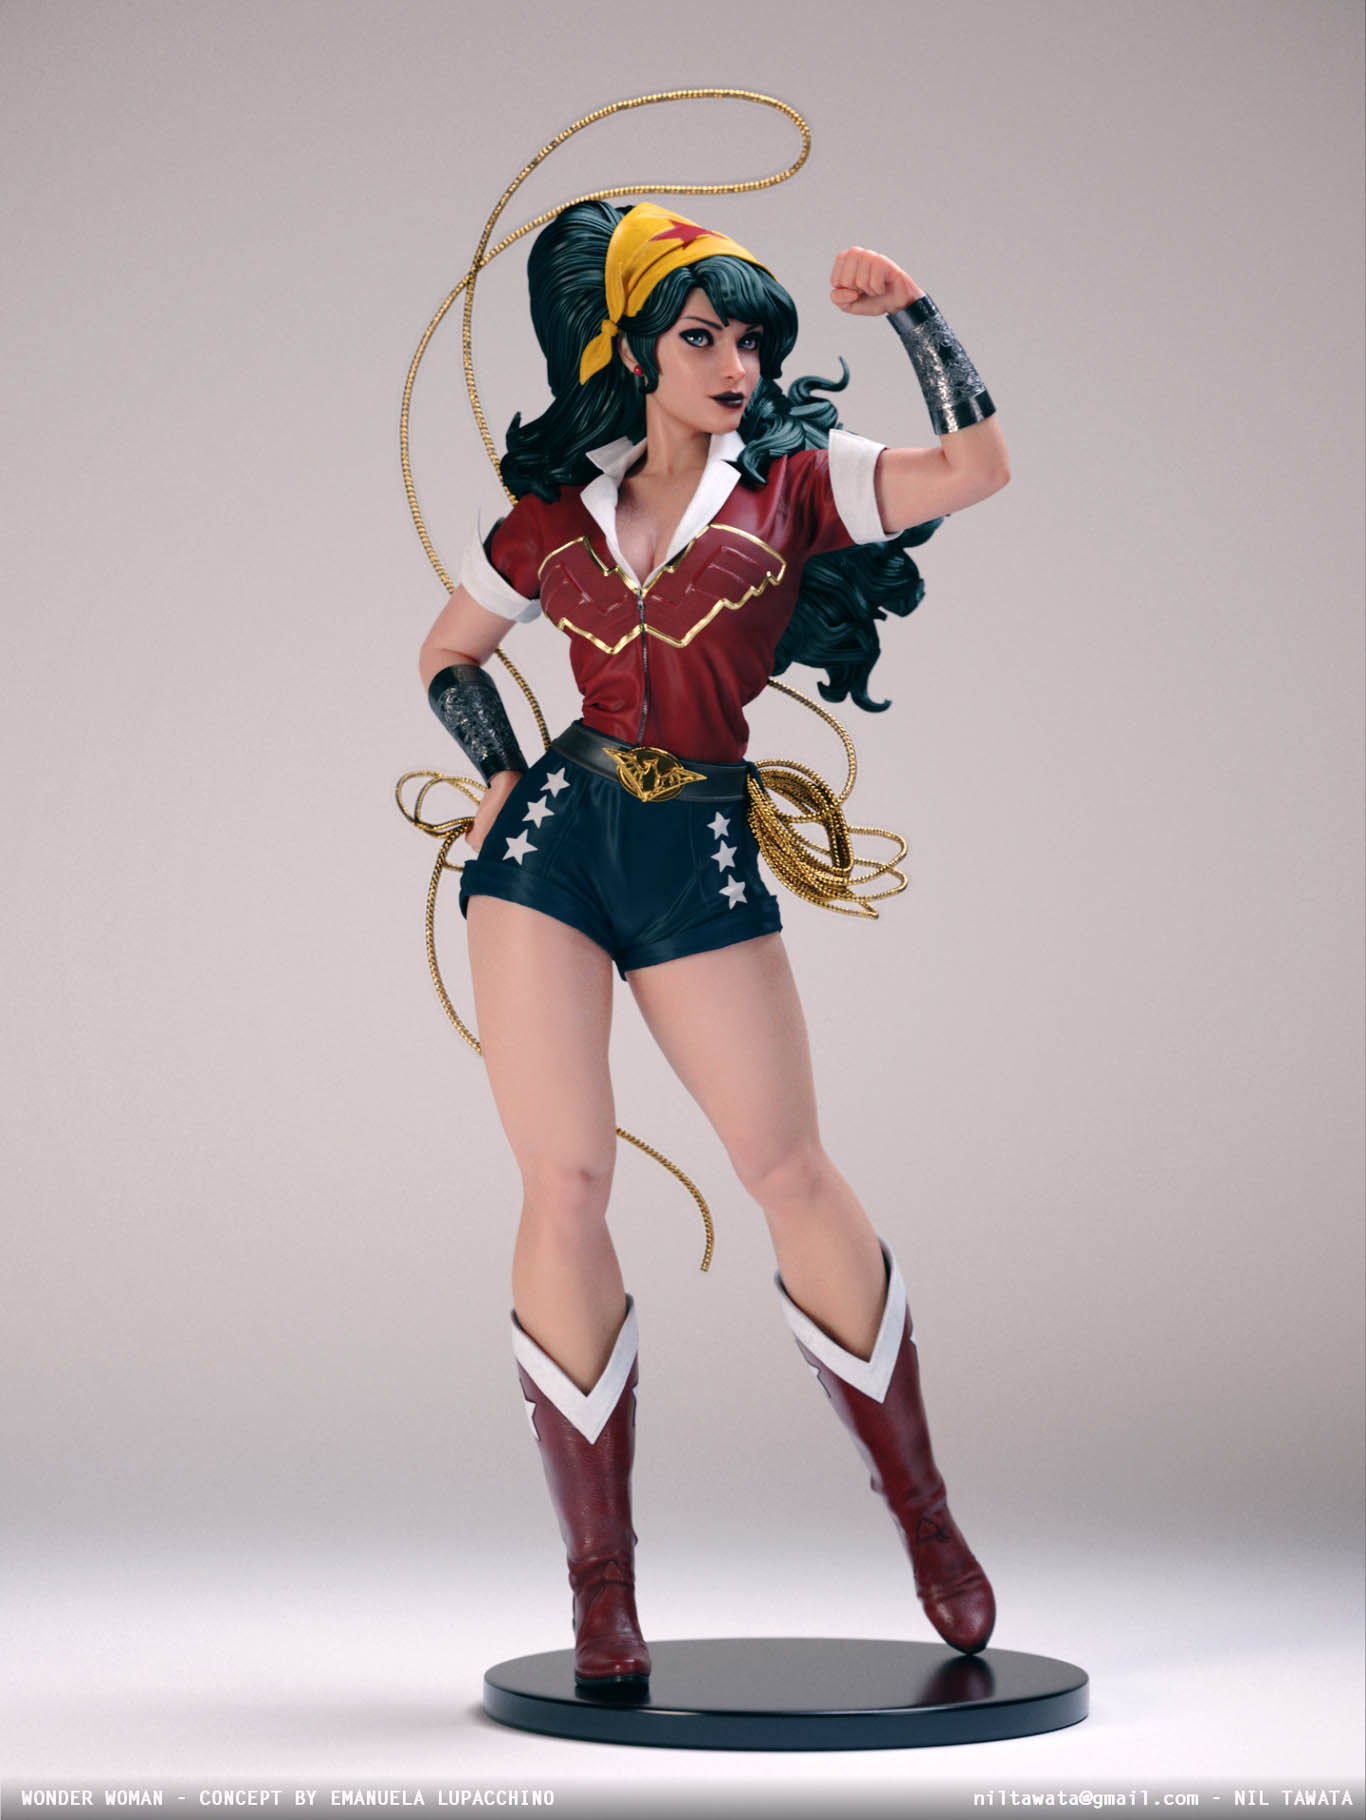 3d model character wonderwoman